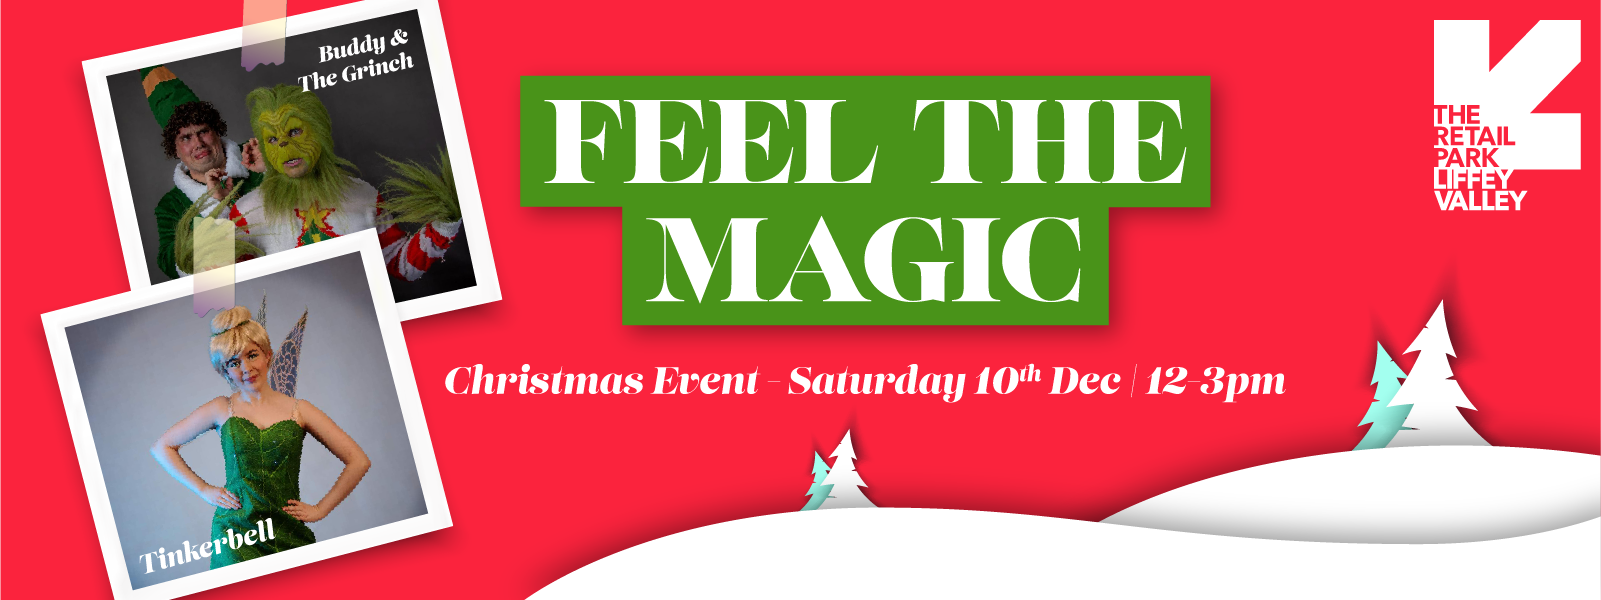 Feel the Magic Christmas Event